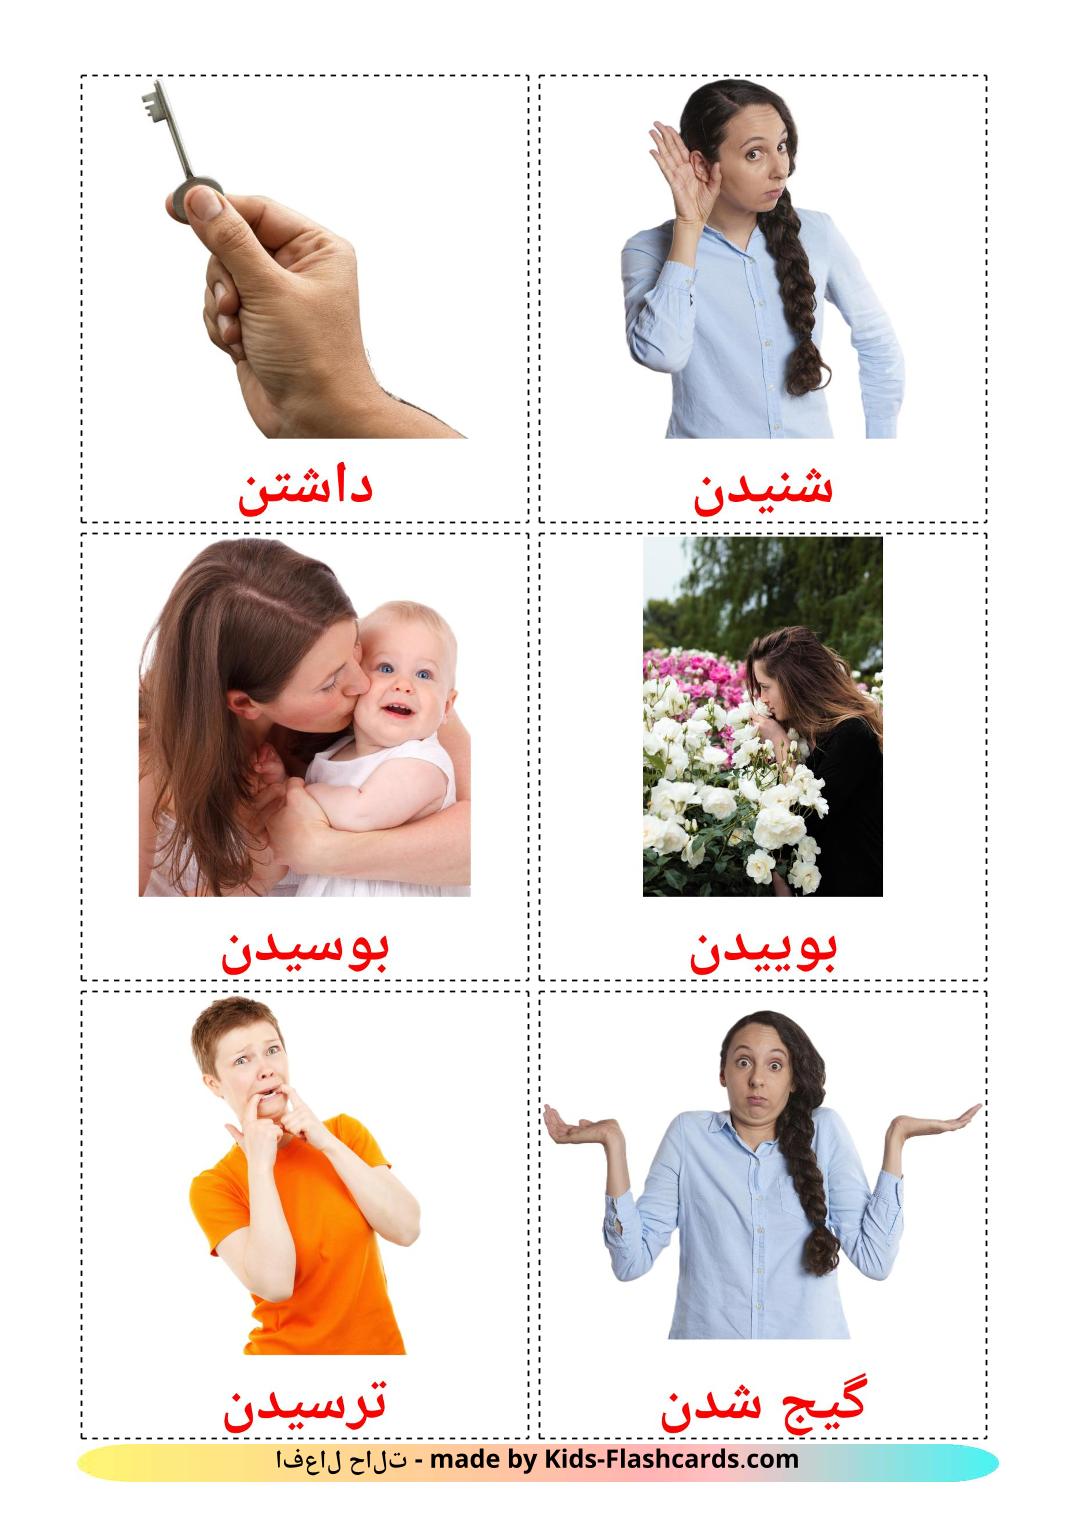 Verbos de Estado - 23 Flashcards persaes gratuitos para impressão